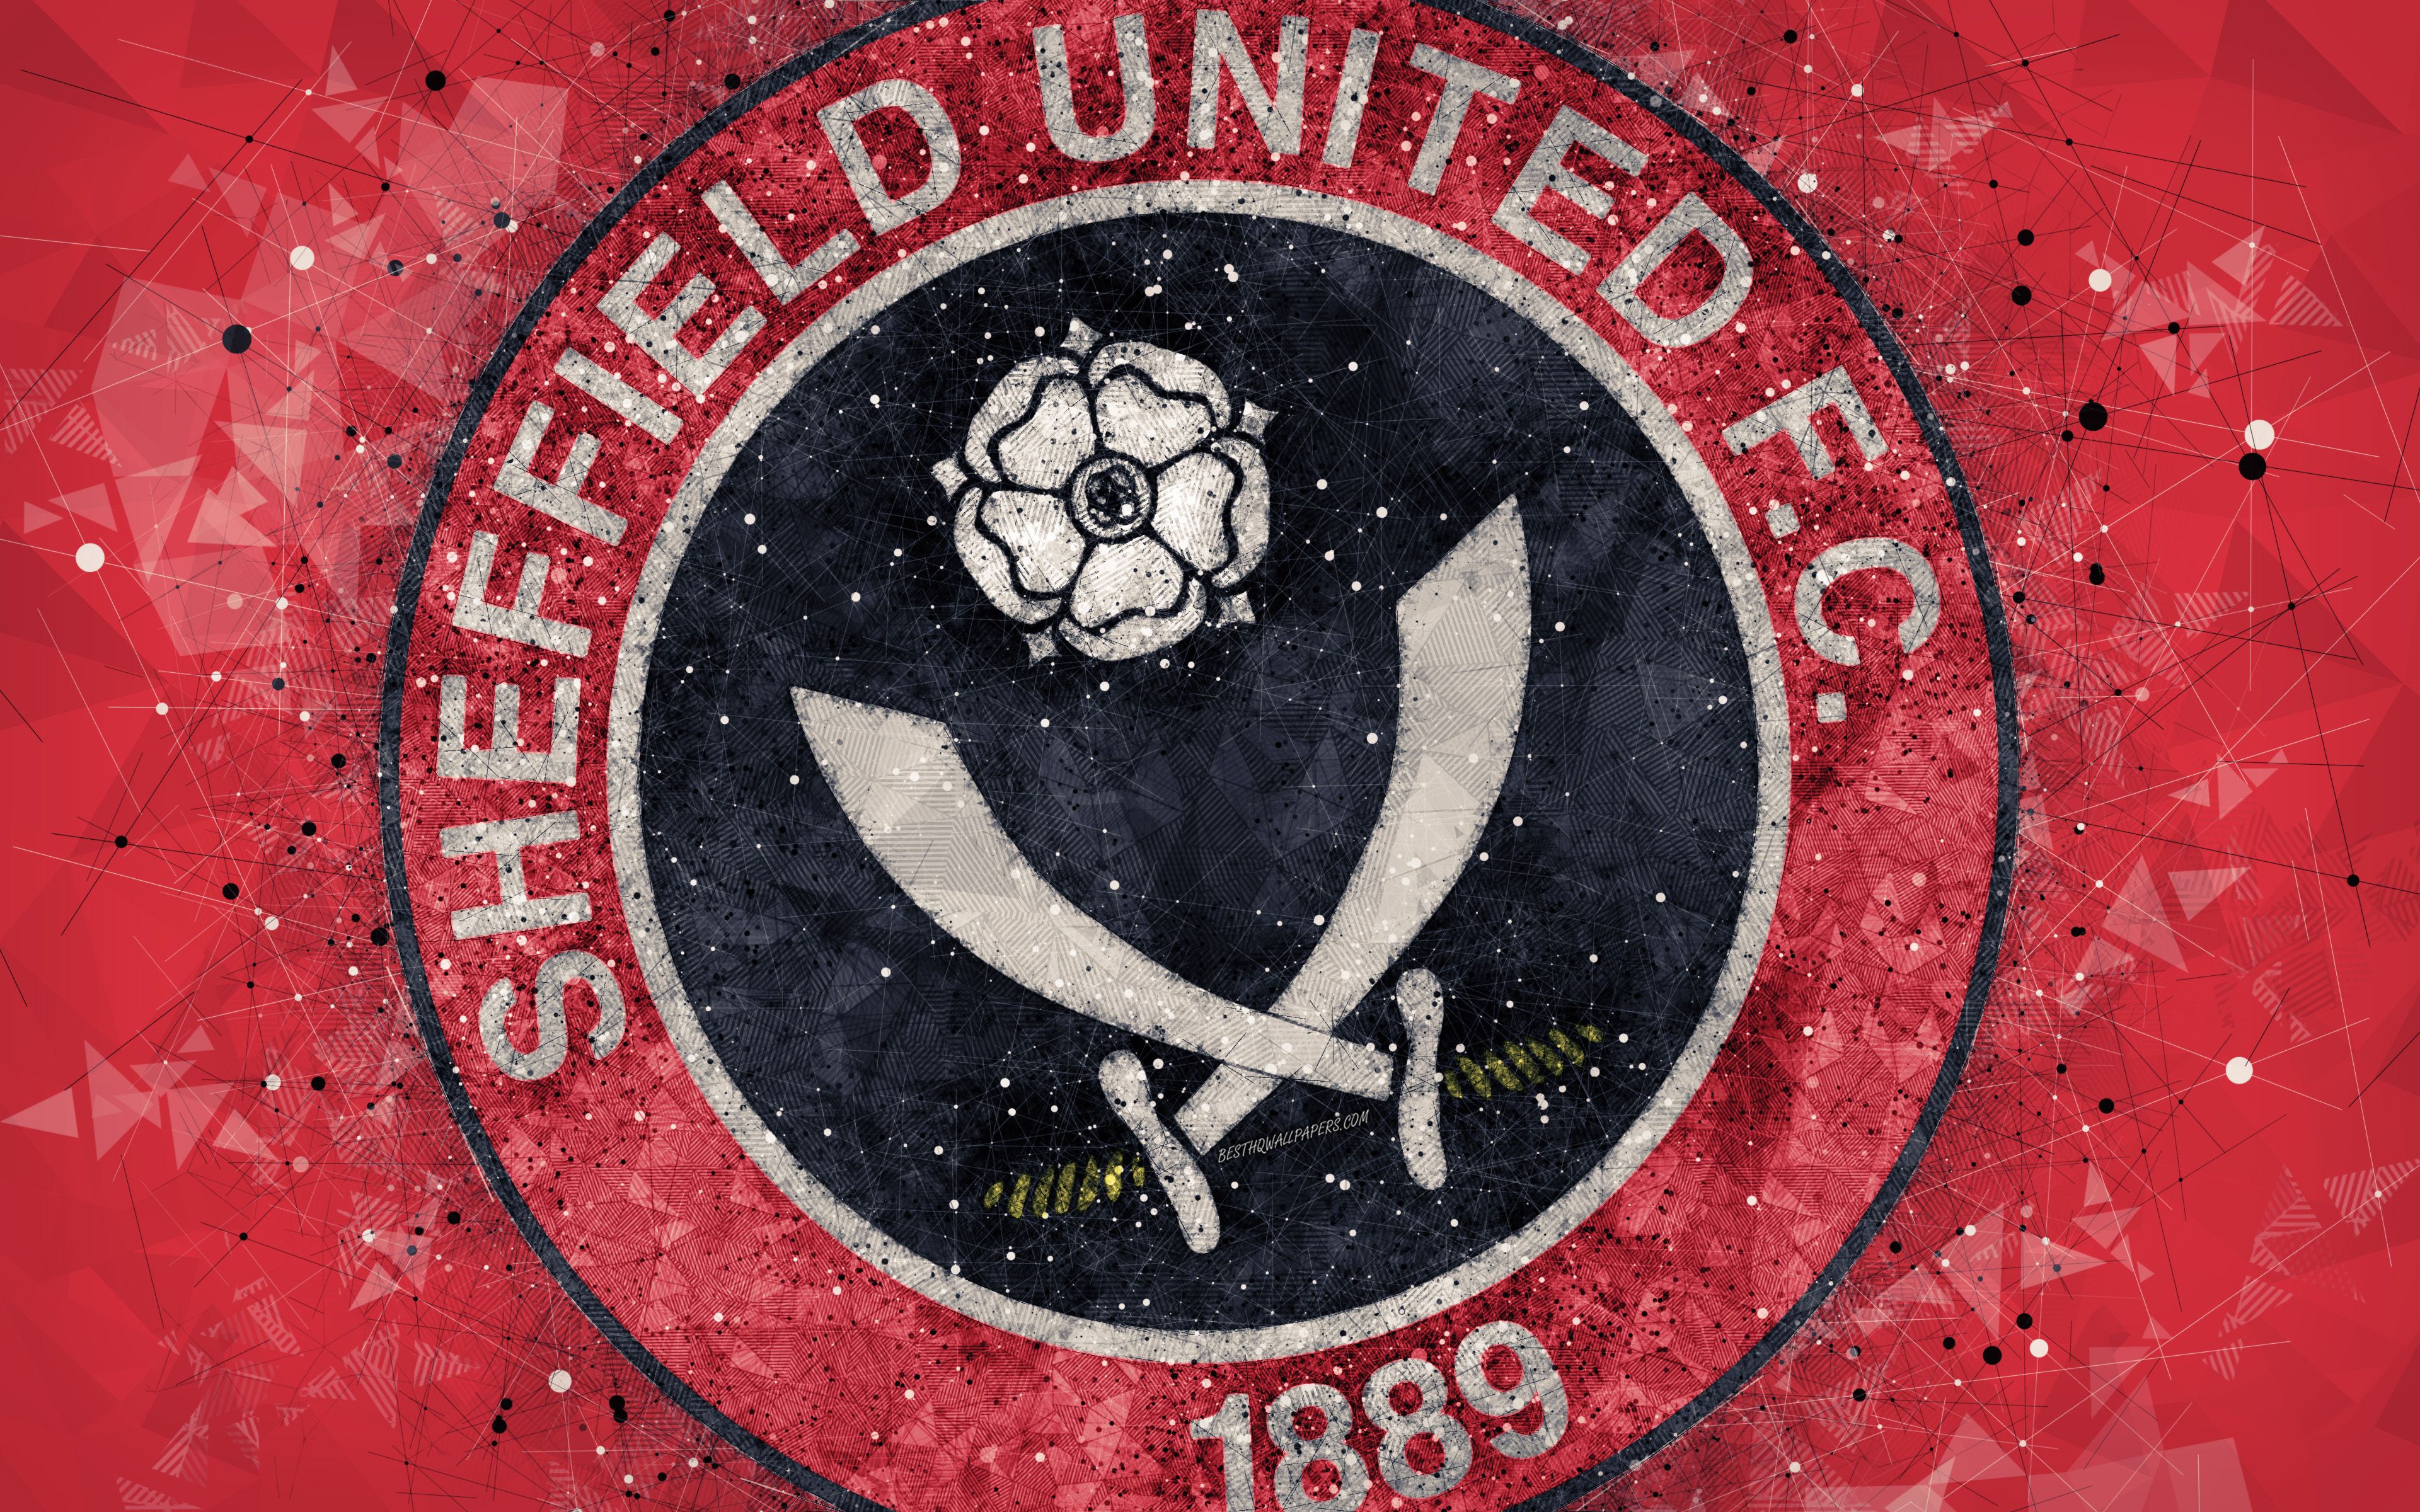 Download wallpaper Sheffield United FC, 4k, geometric art, logo